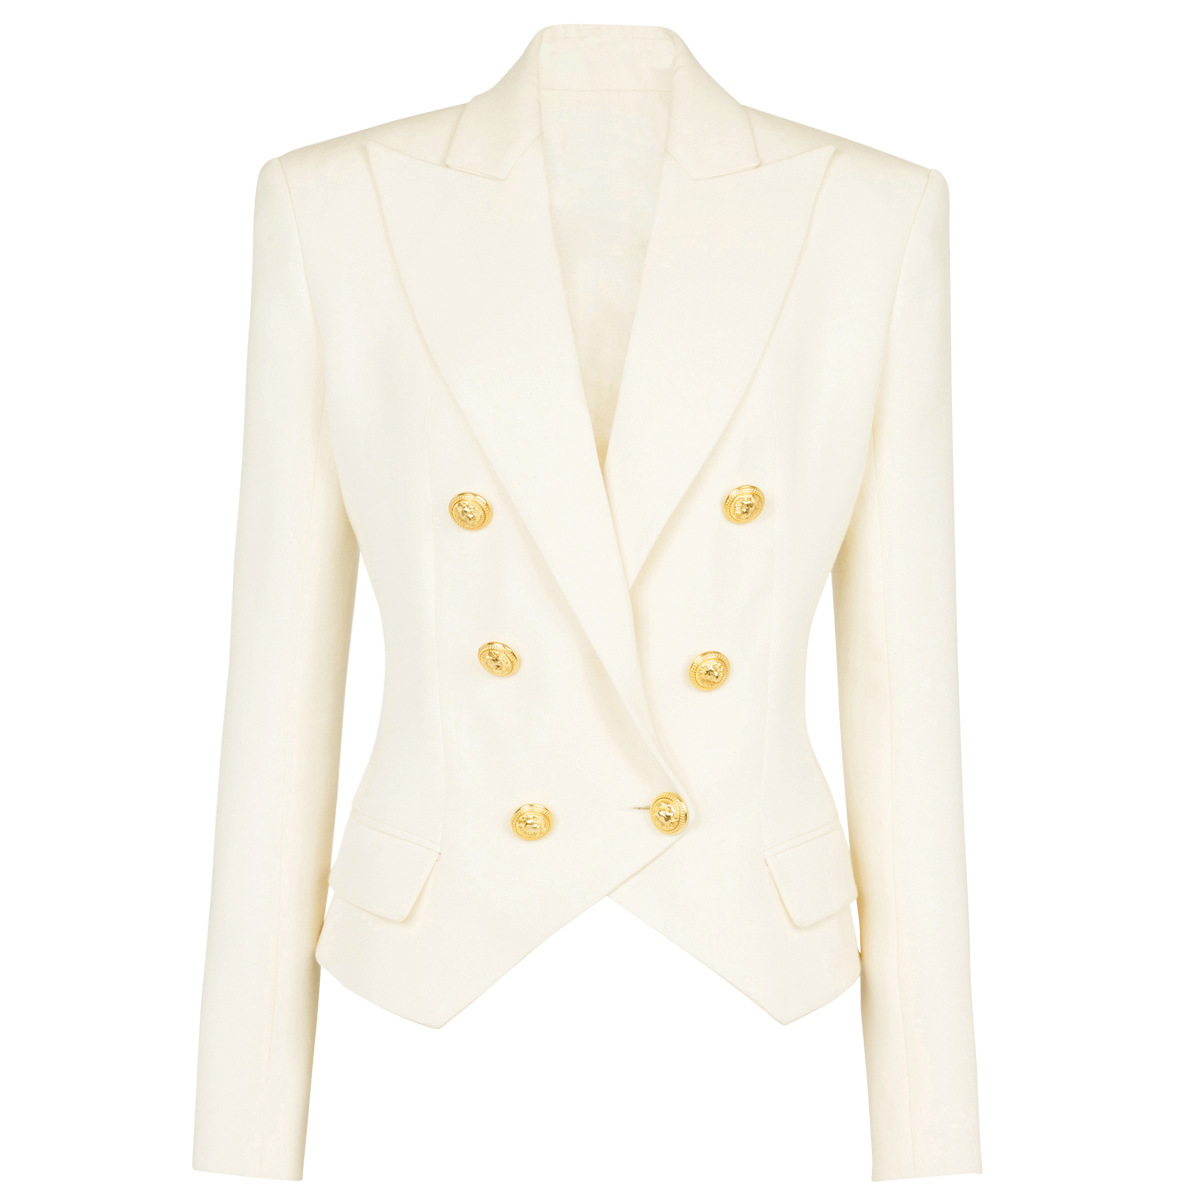 New Designer Women Blazers Coats Lion Head Golden Buttons Double Breasted Suit Jacket Female Elegant Fashion Slim Lady Business Blazer Clothing